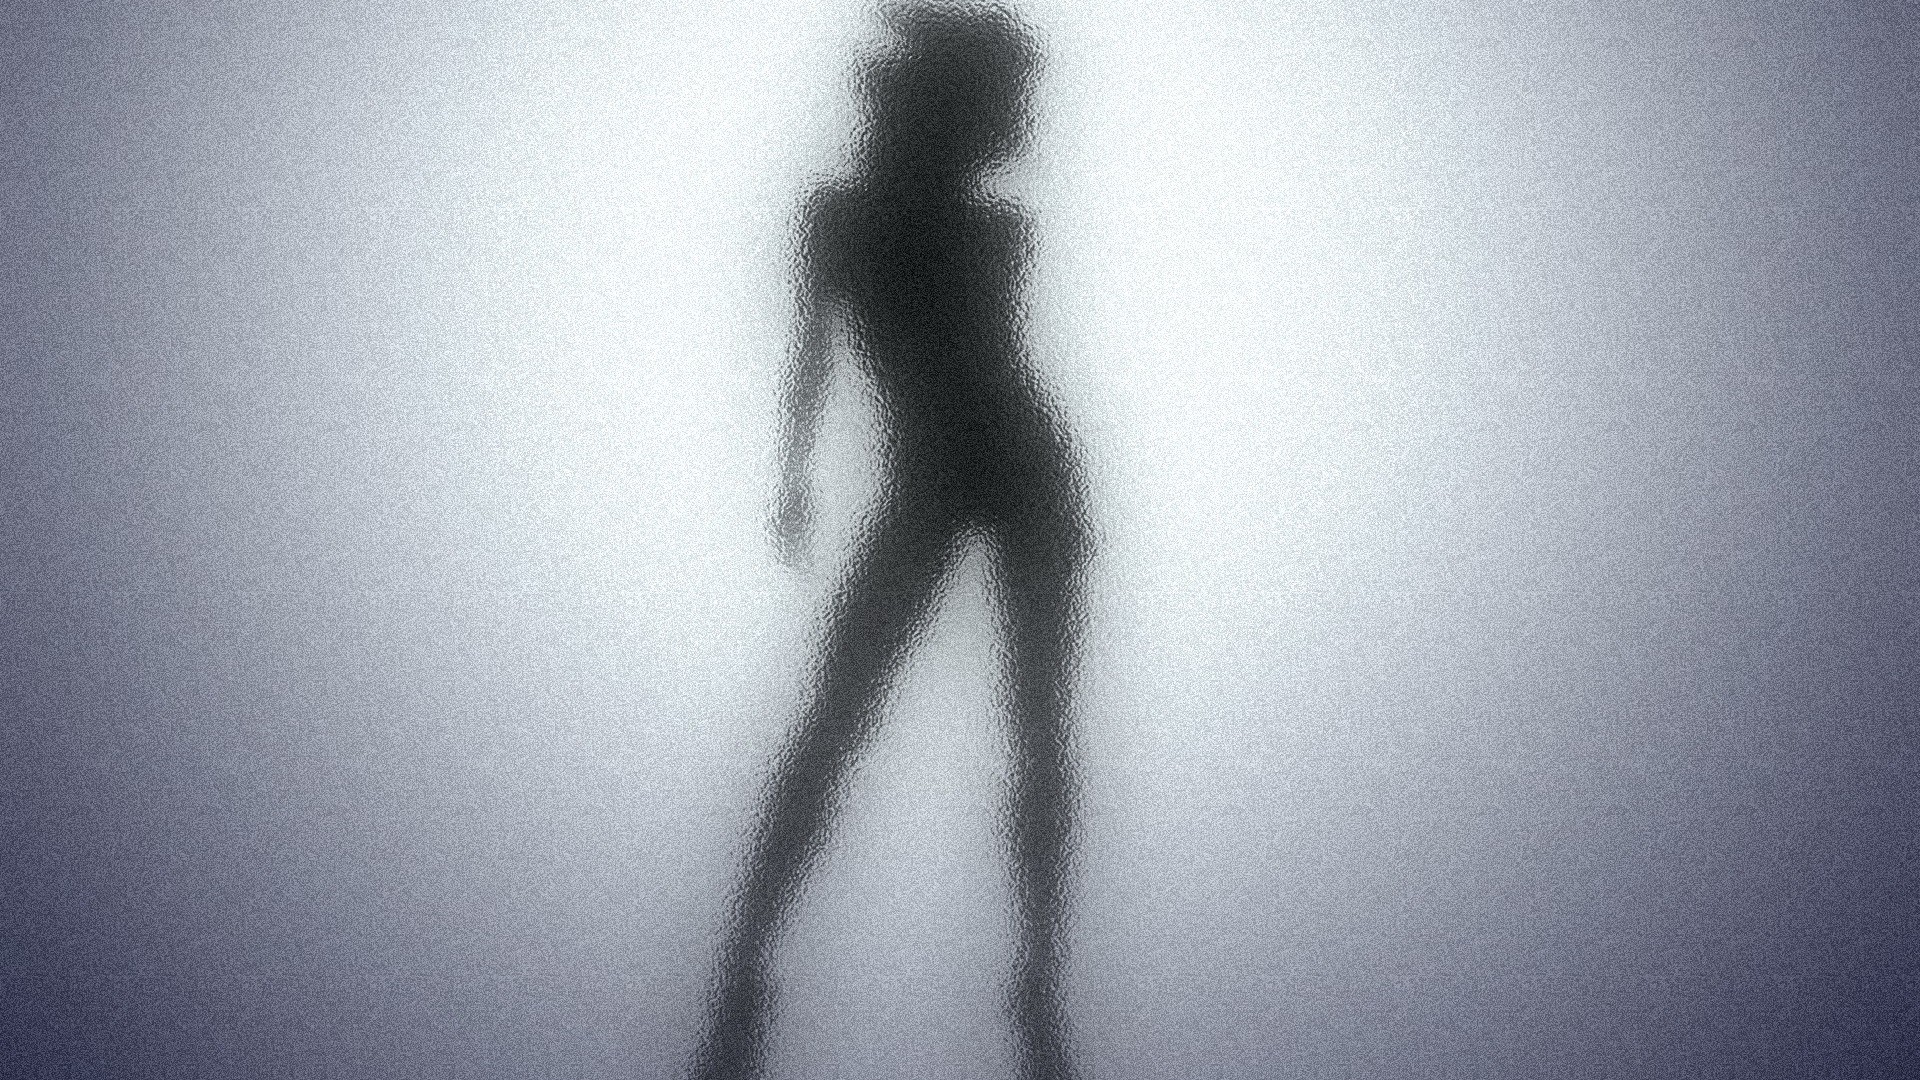 General 1920x1080 blurred outline women glass silhouette standing legs artwork erotic art  behind the glass eyes hidden